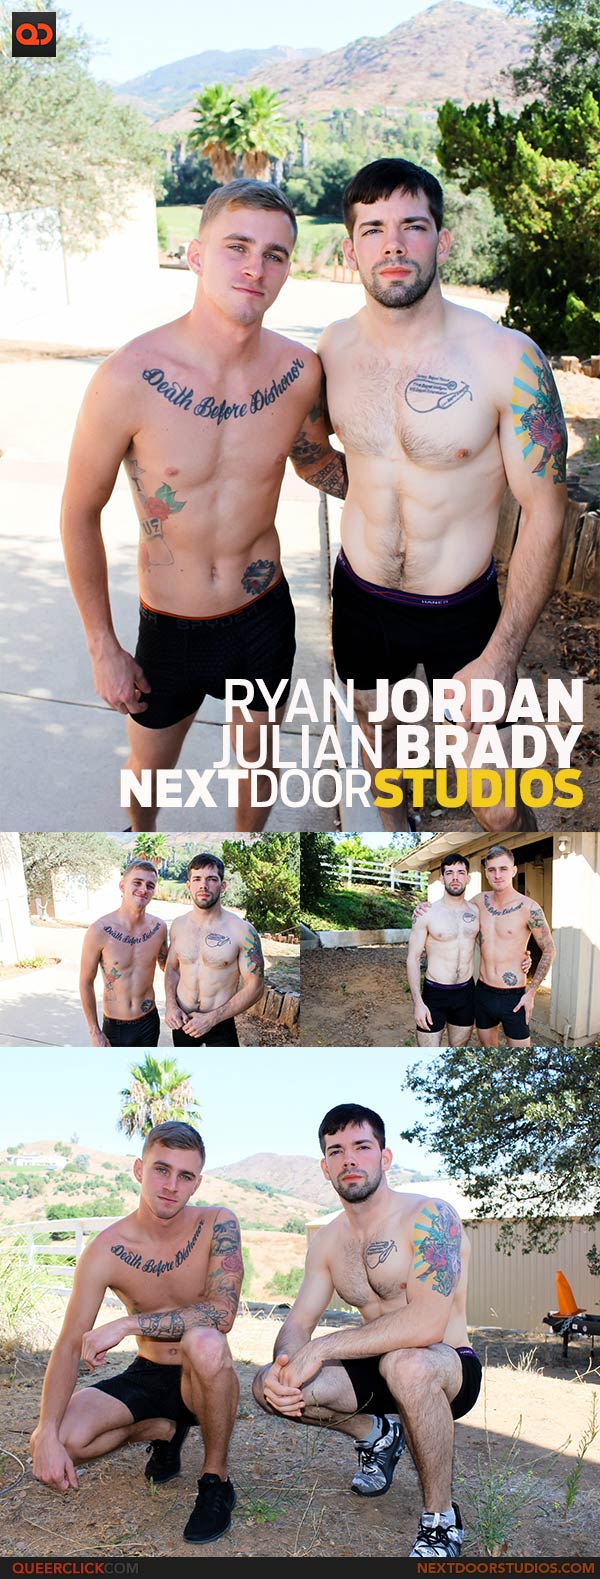 Next Door Studios: Julian Brady and Ryan Jordan - Hardcore Casting